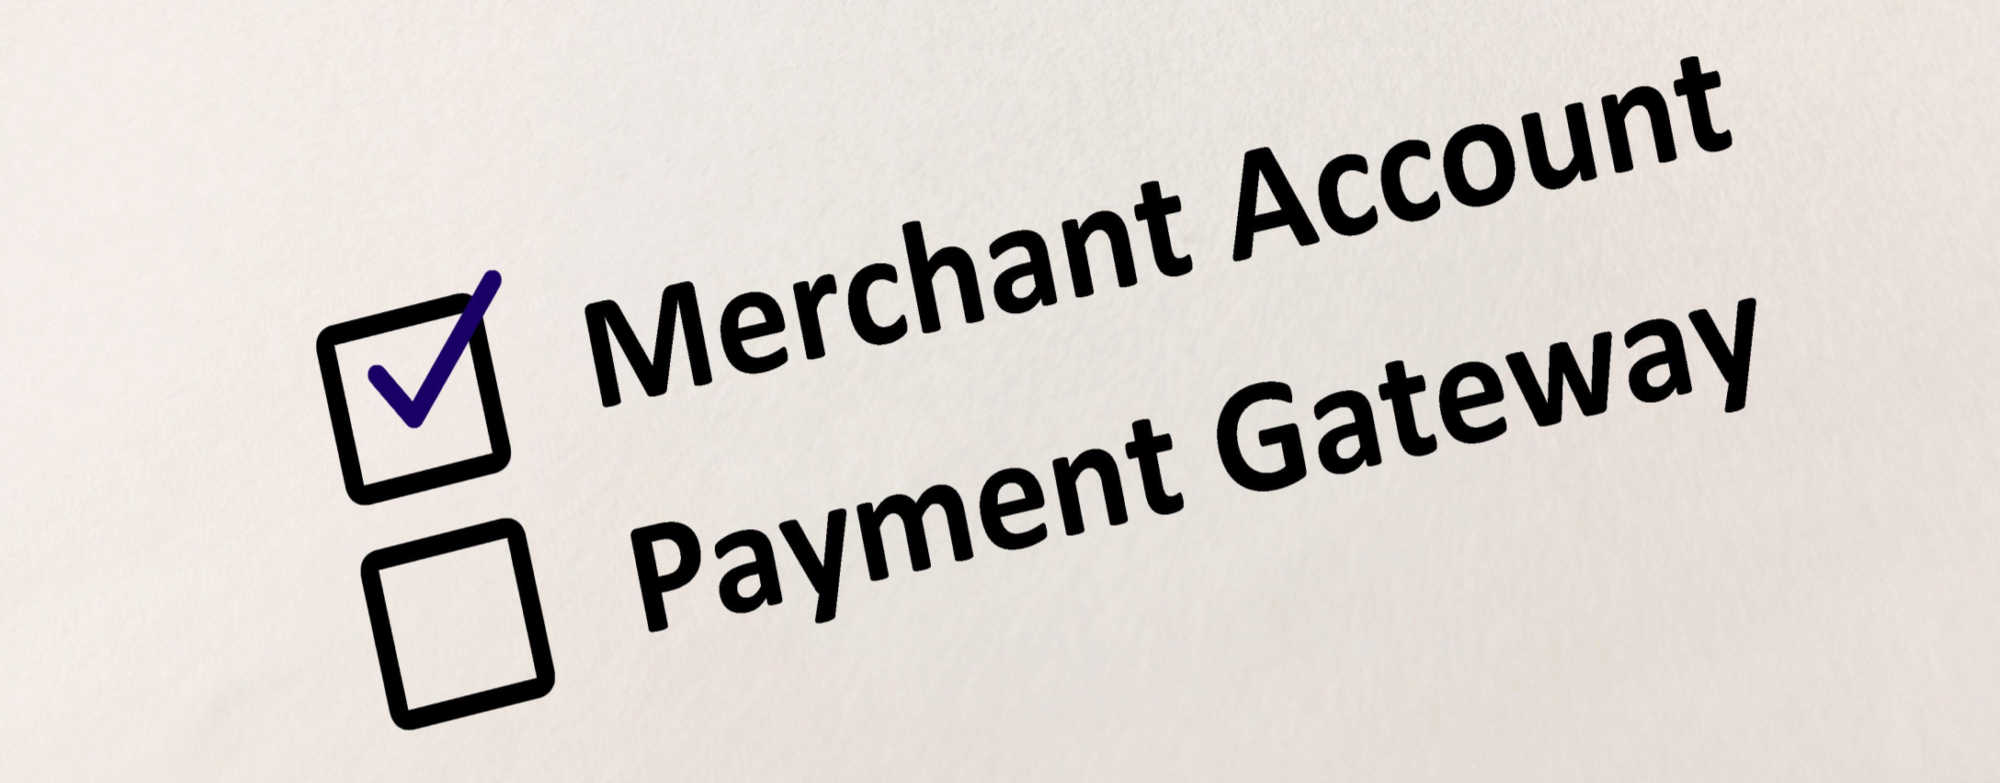 image of merchant account